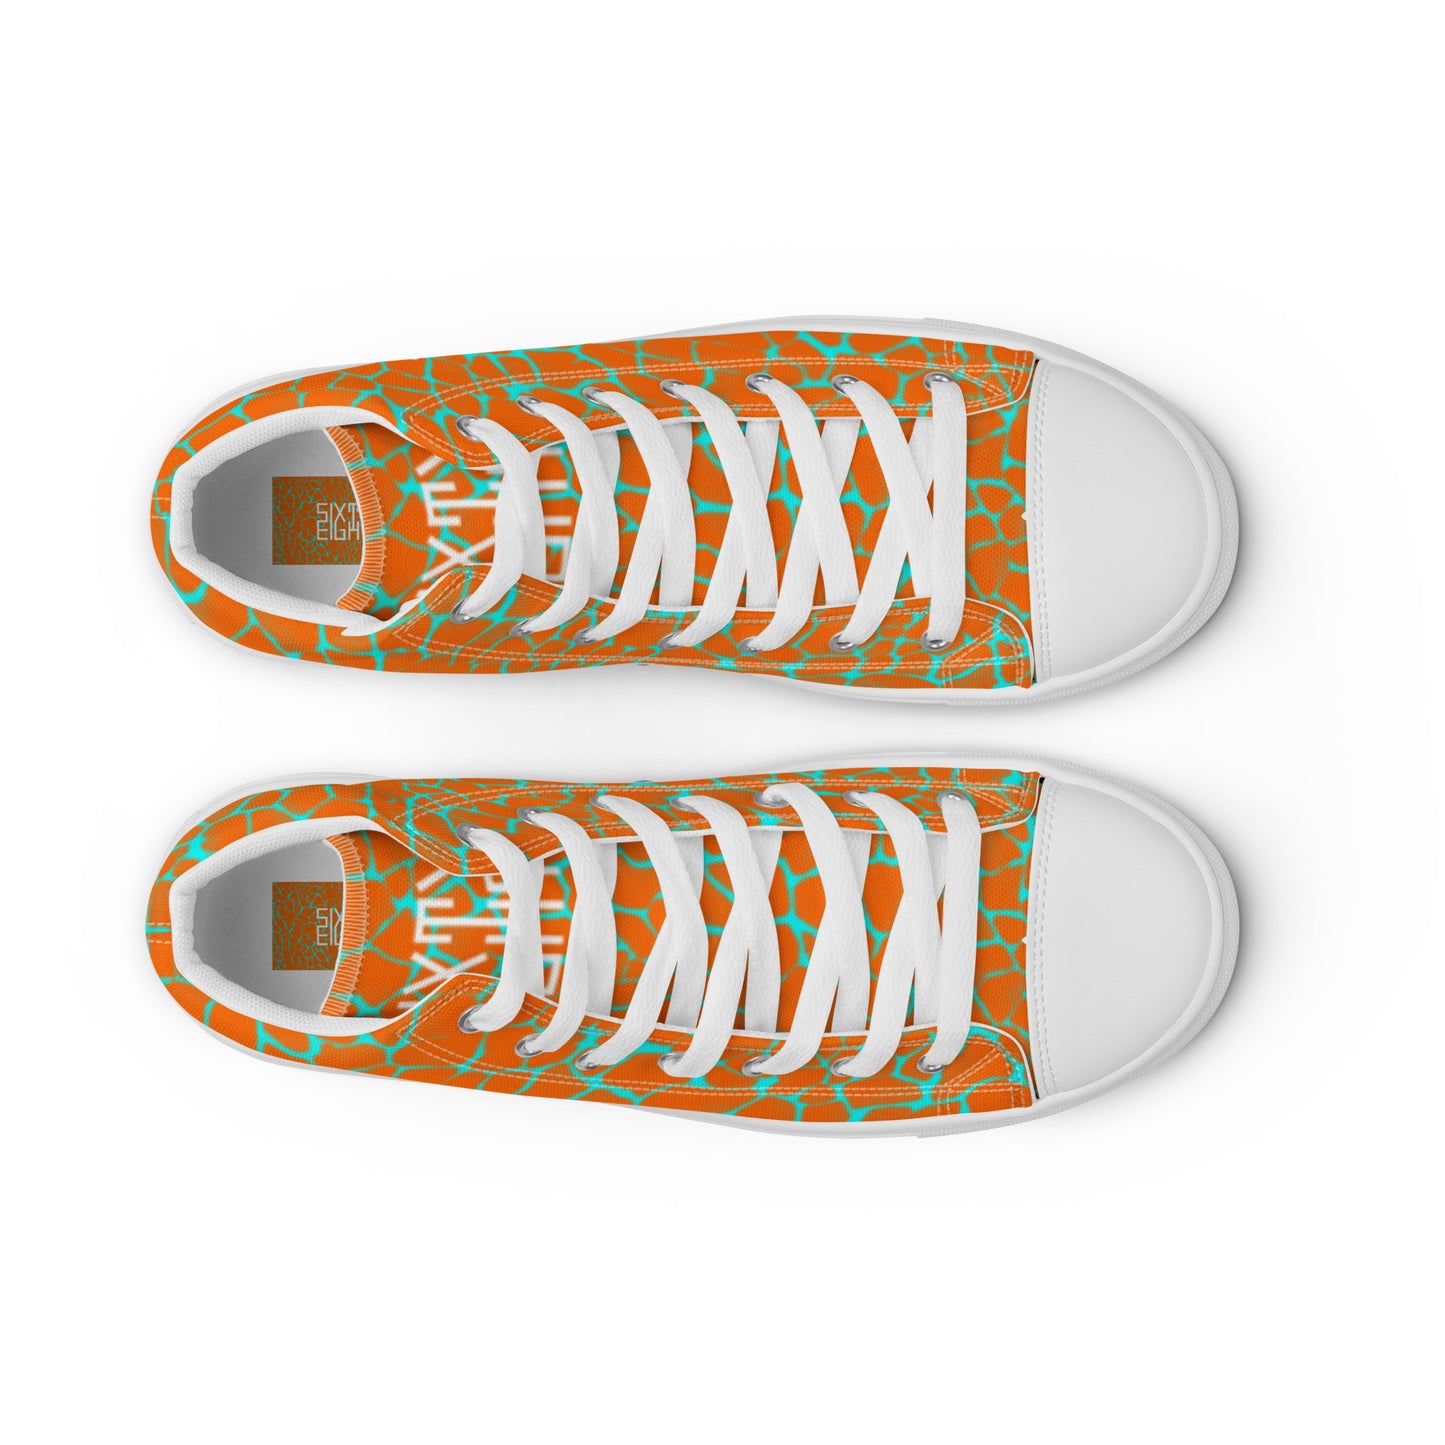 Sixty Eight 93 Logo White Boa Orange & Aqua Blue Men’s High Top Shoes